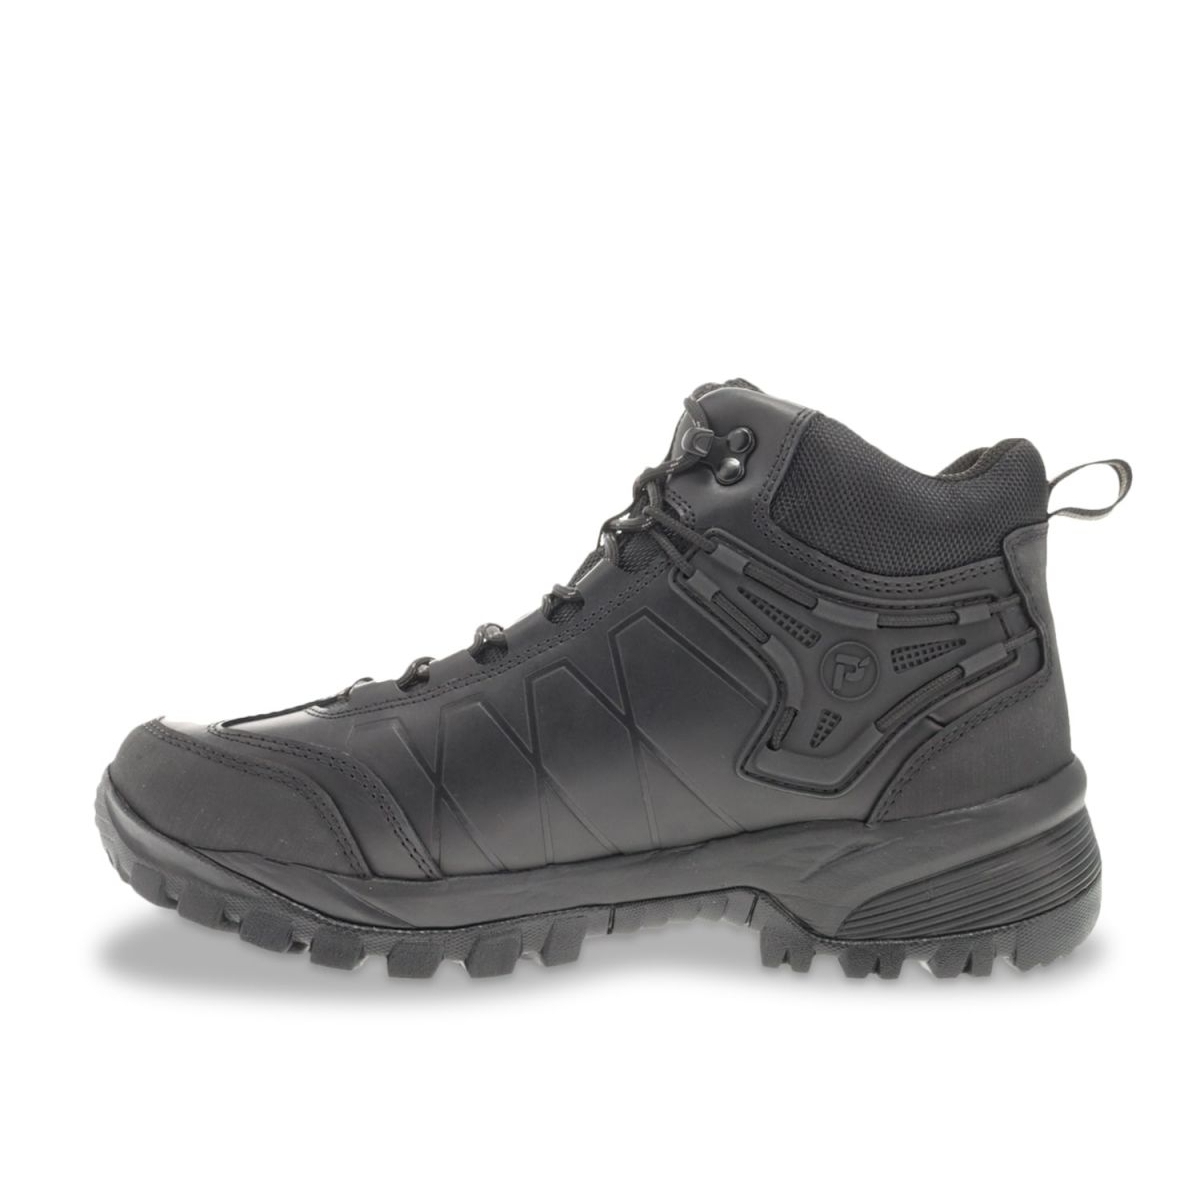 Propet Men's Ridge Walker Force Hiking Boots Black - MBA052LBLK BLACK - BLACK, 14 X-Wide